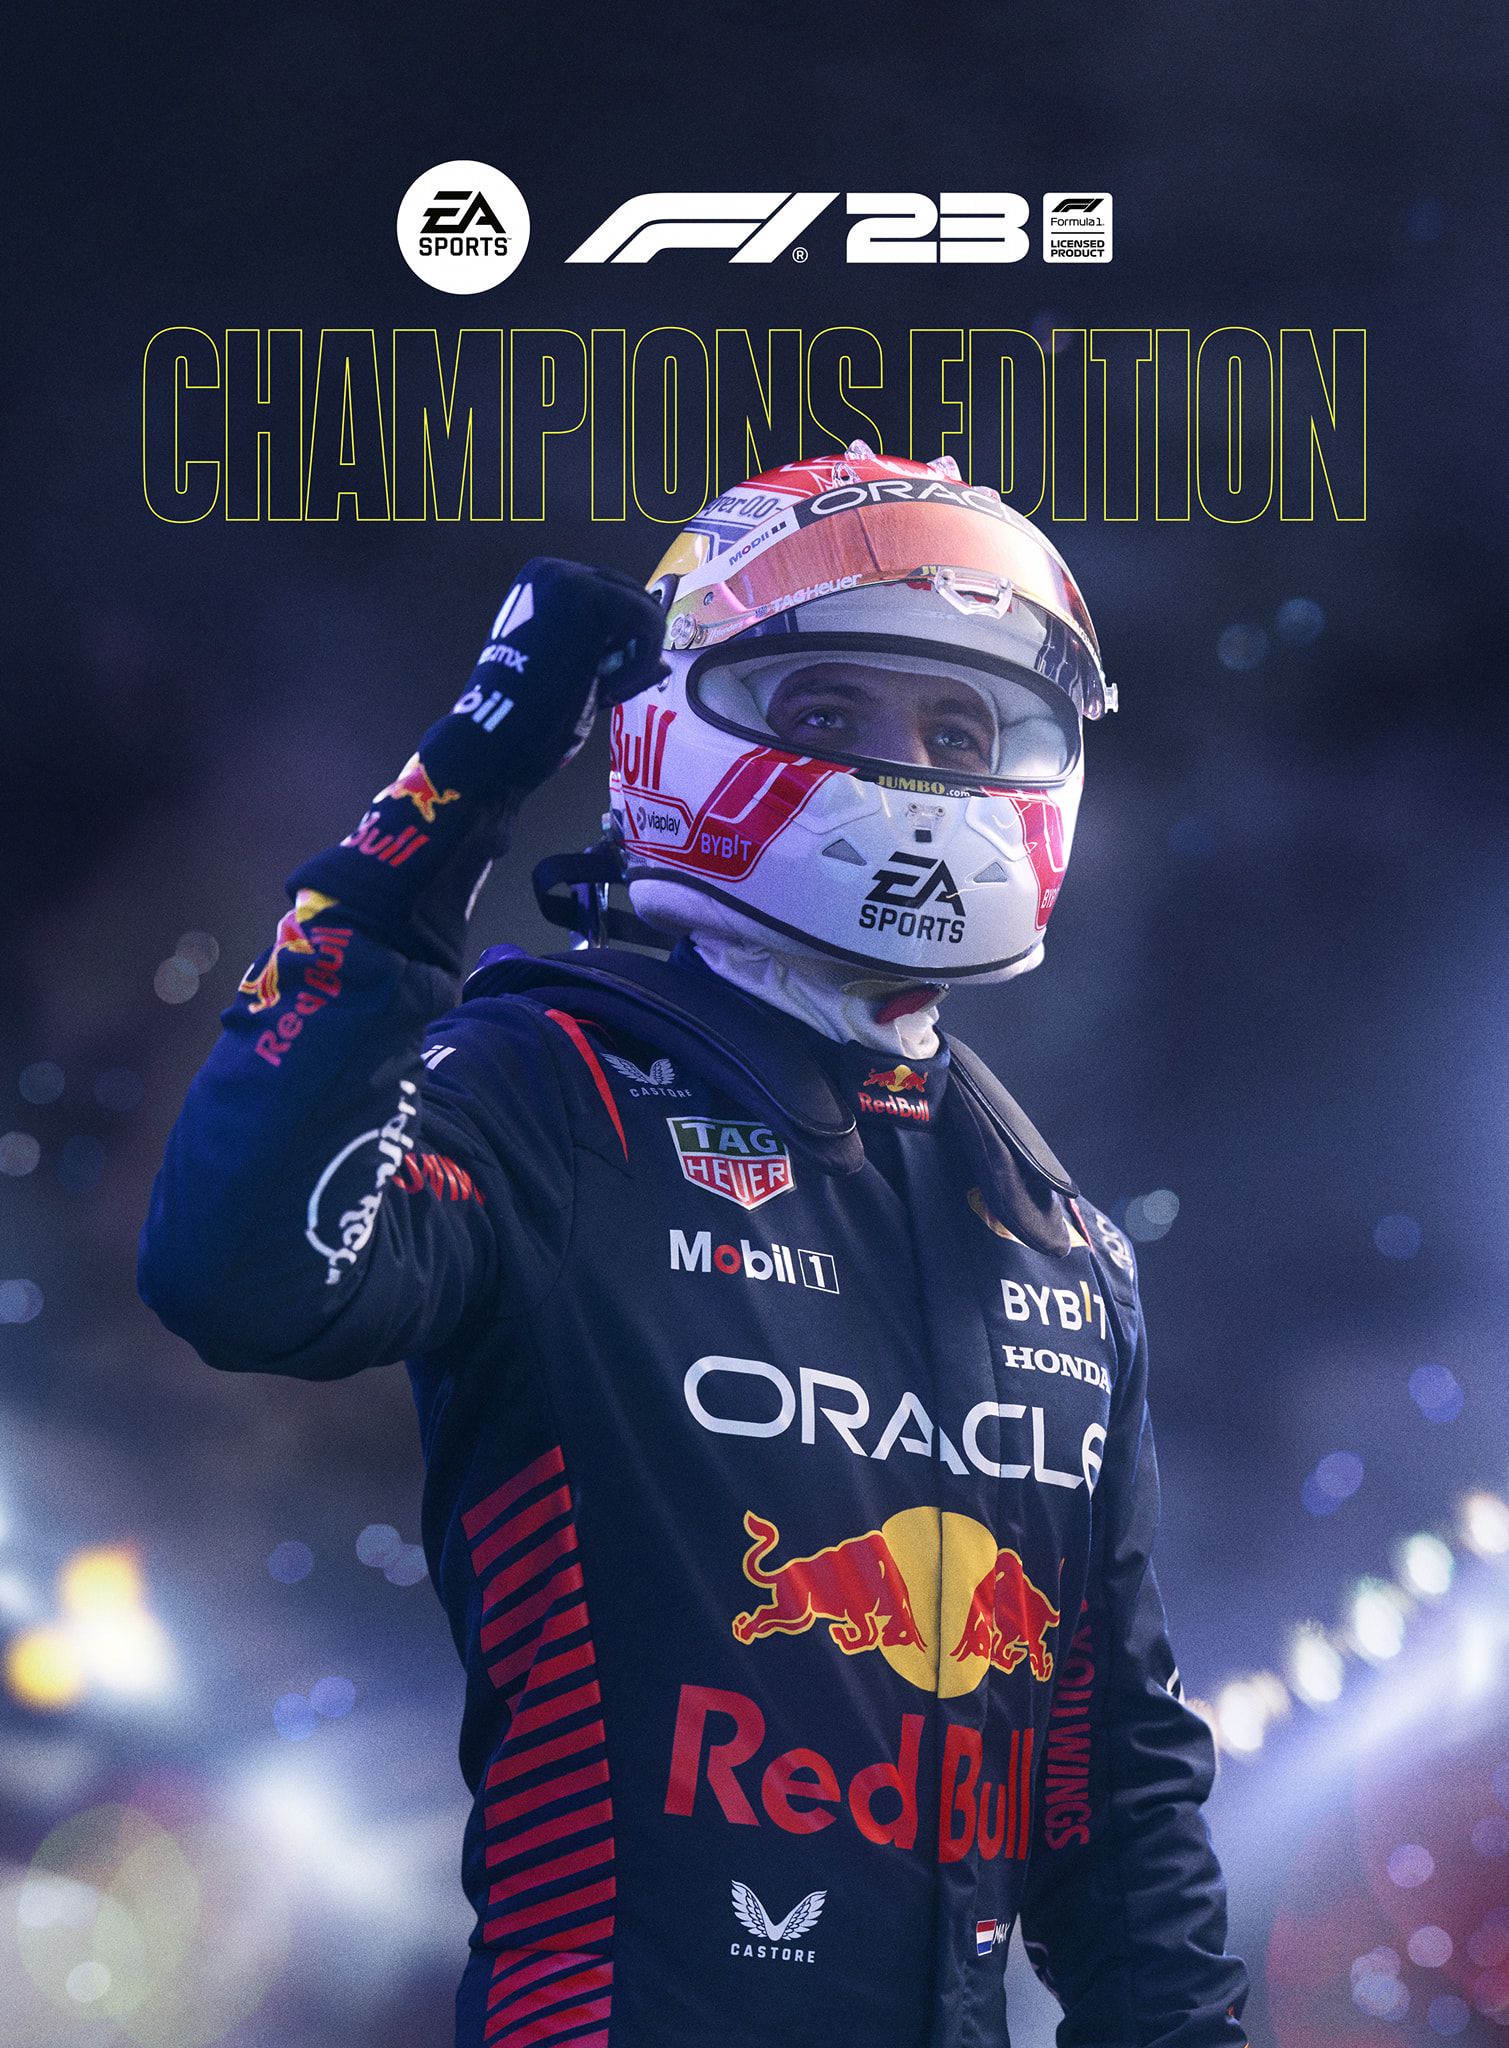 F1 23 Champions Edition Max Verstappen